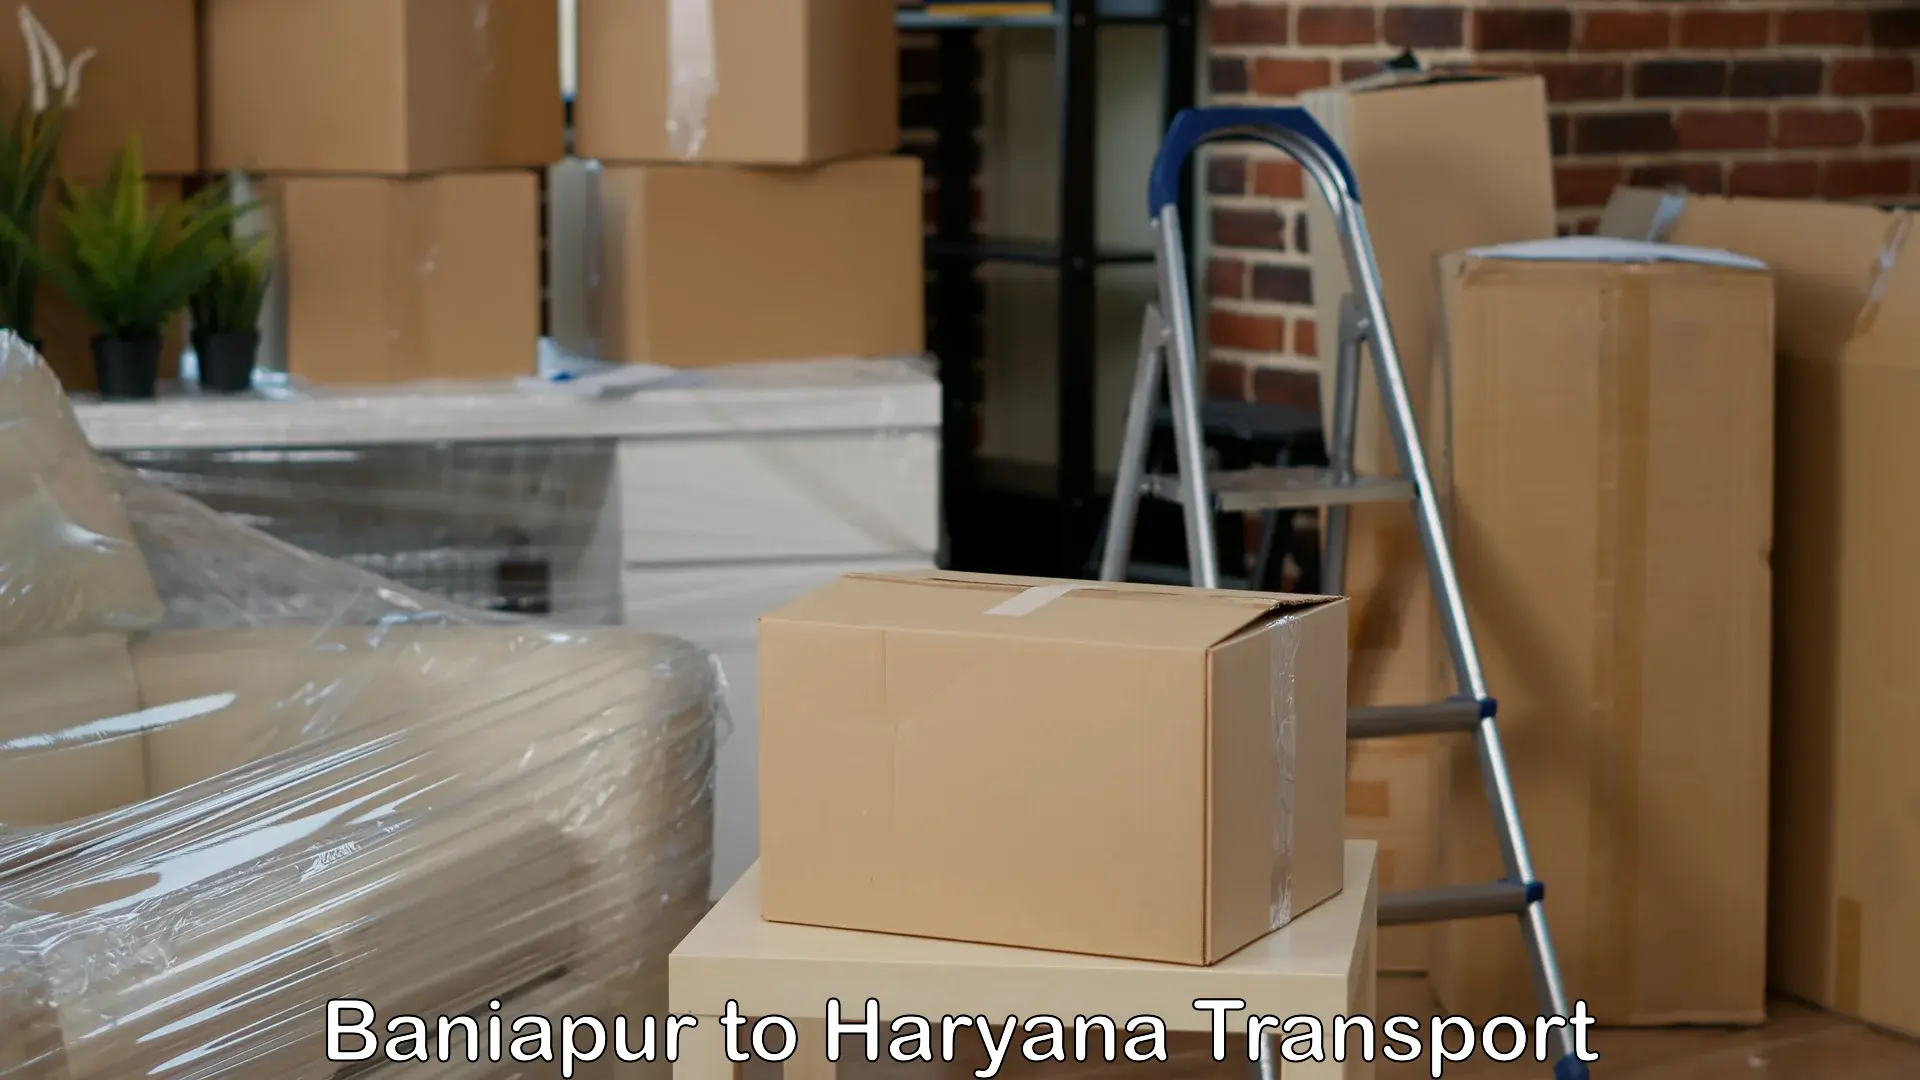 Truck transport companies in India Baniapur to Charkhari